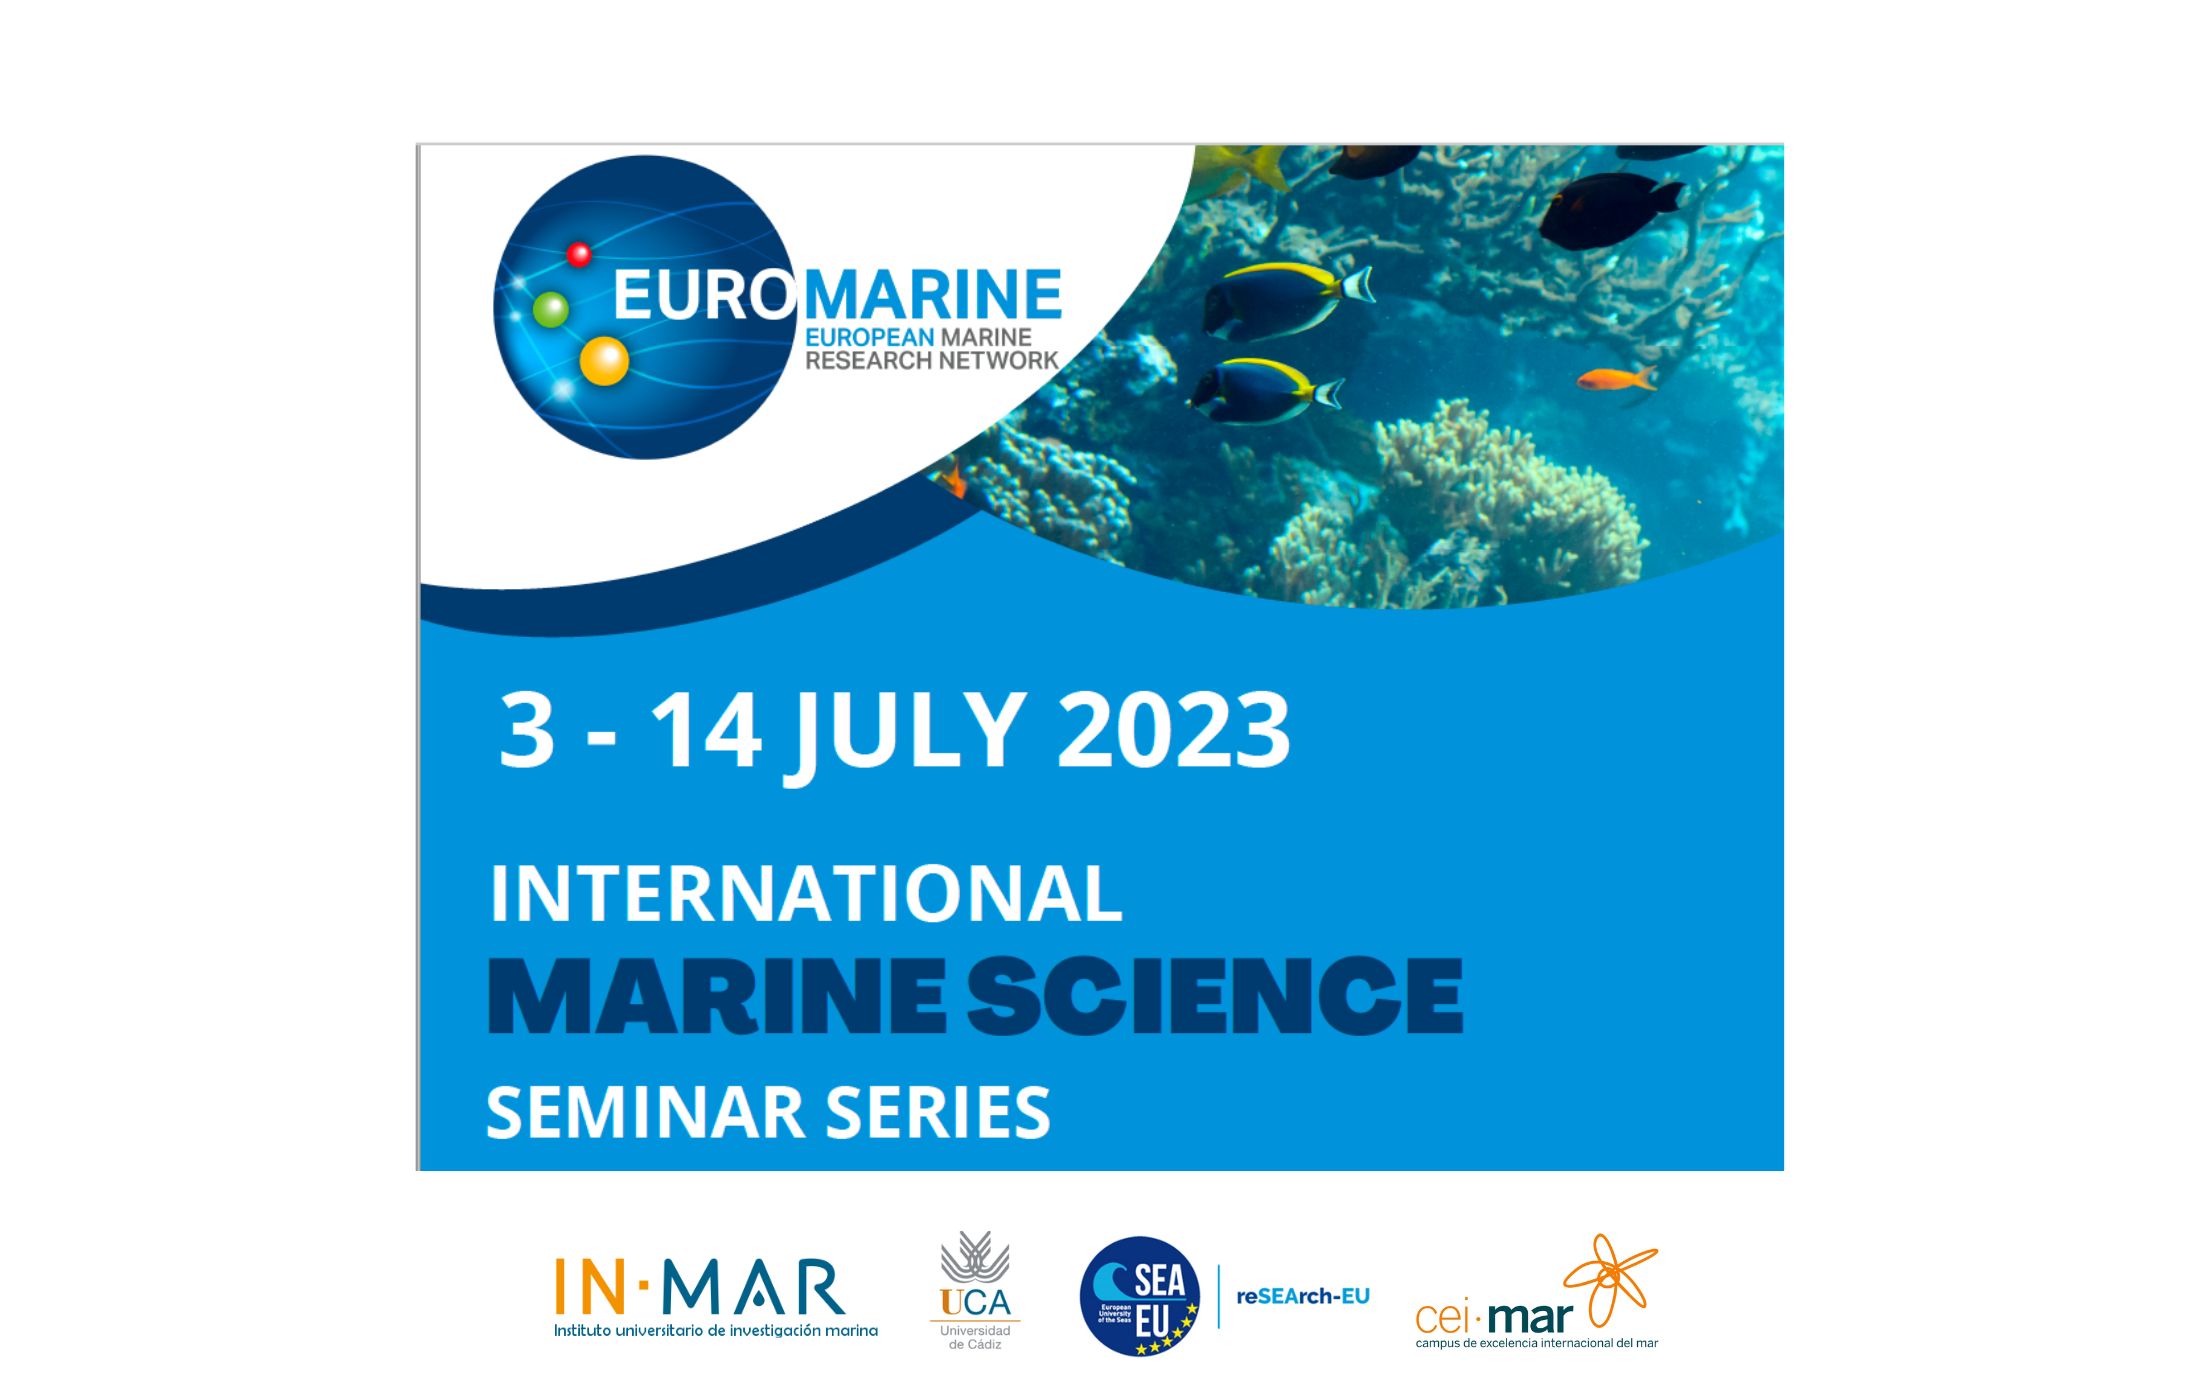 EUROMARINE-UCA-SEA EU International Marine Science Seminar Series